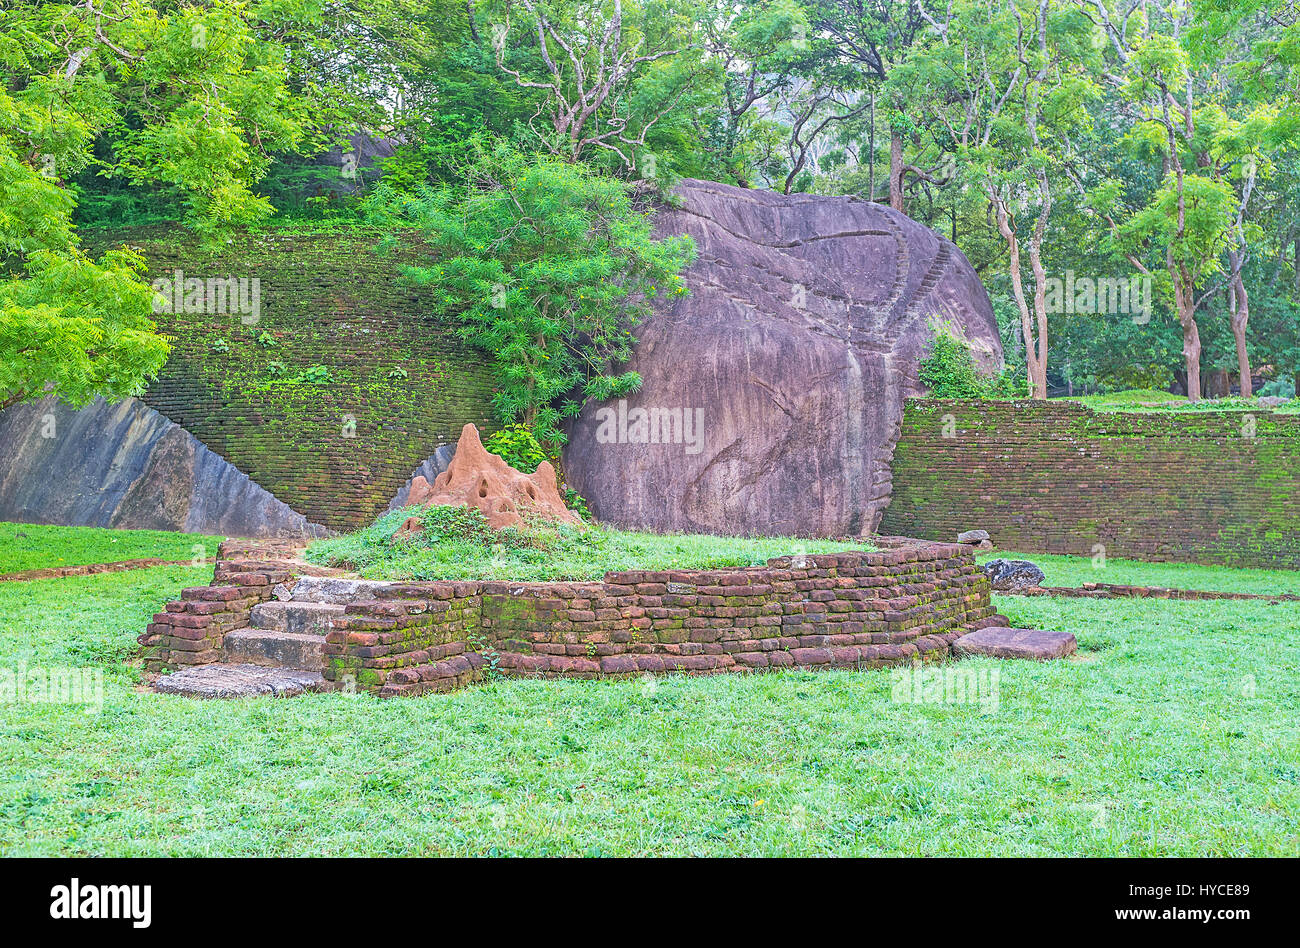 The termitary on the ancient ruins of Sigiriya archaeological site, Sri Lanka. Stock Photo